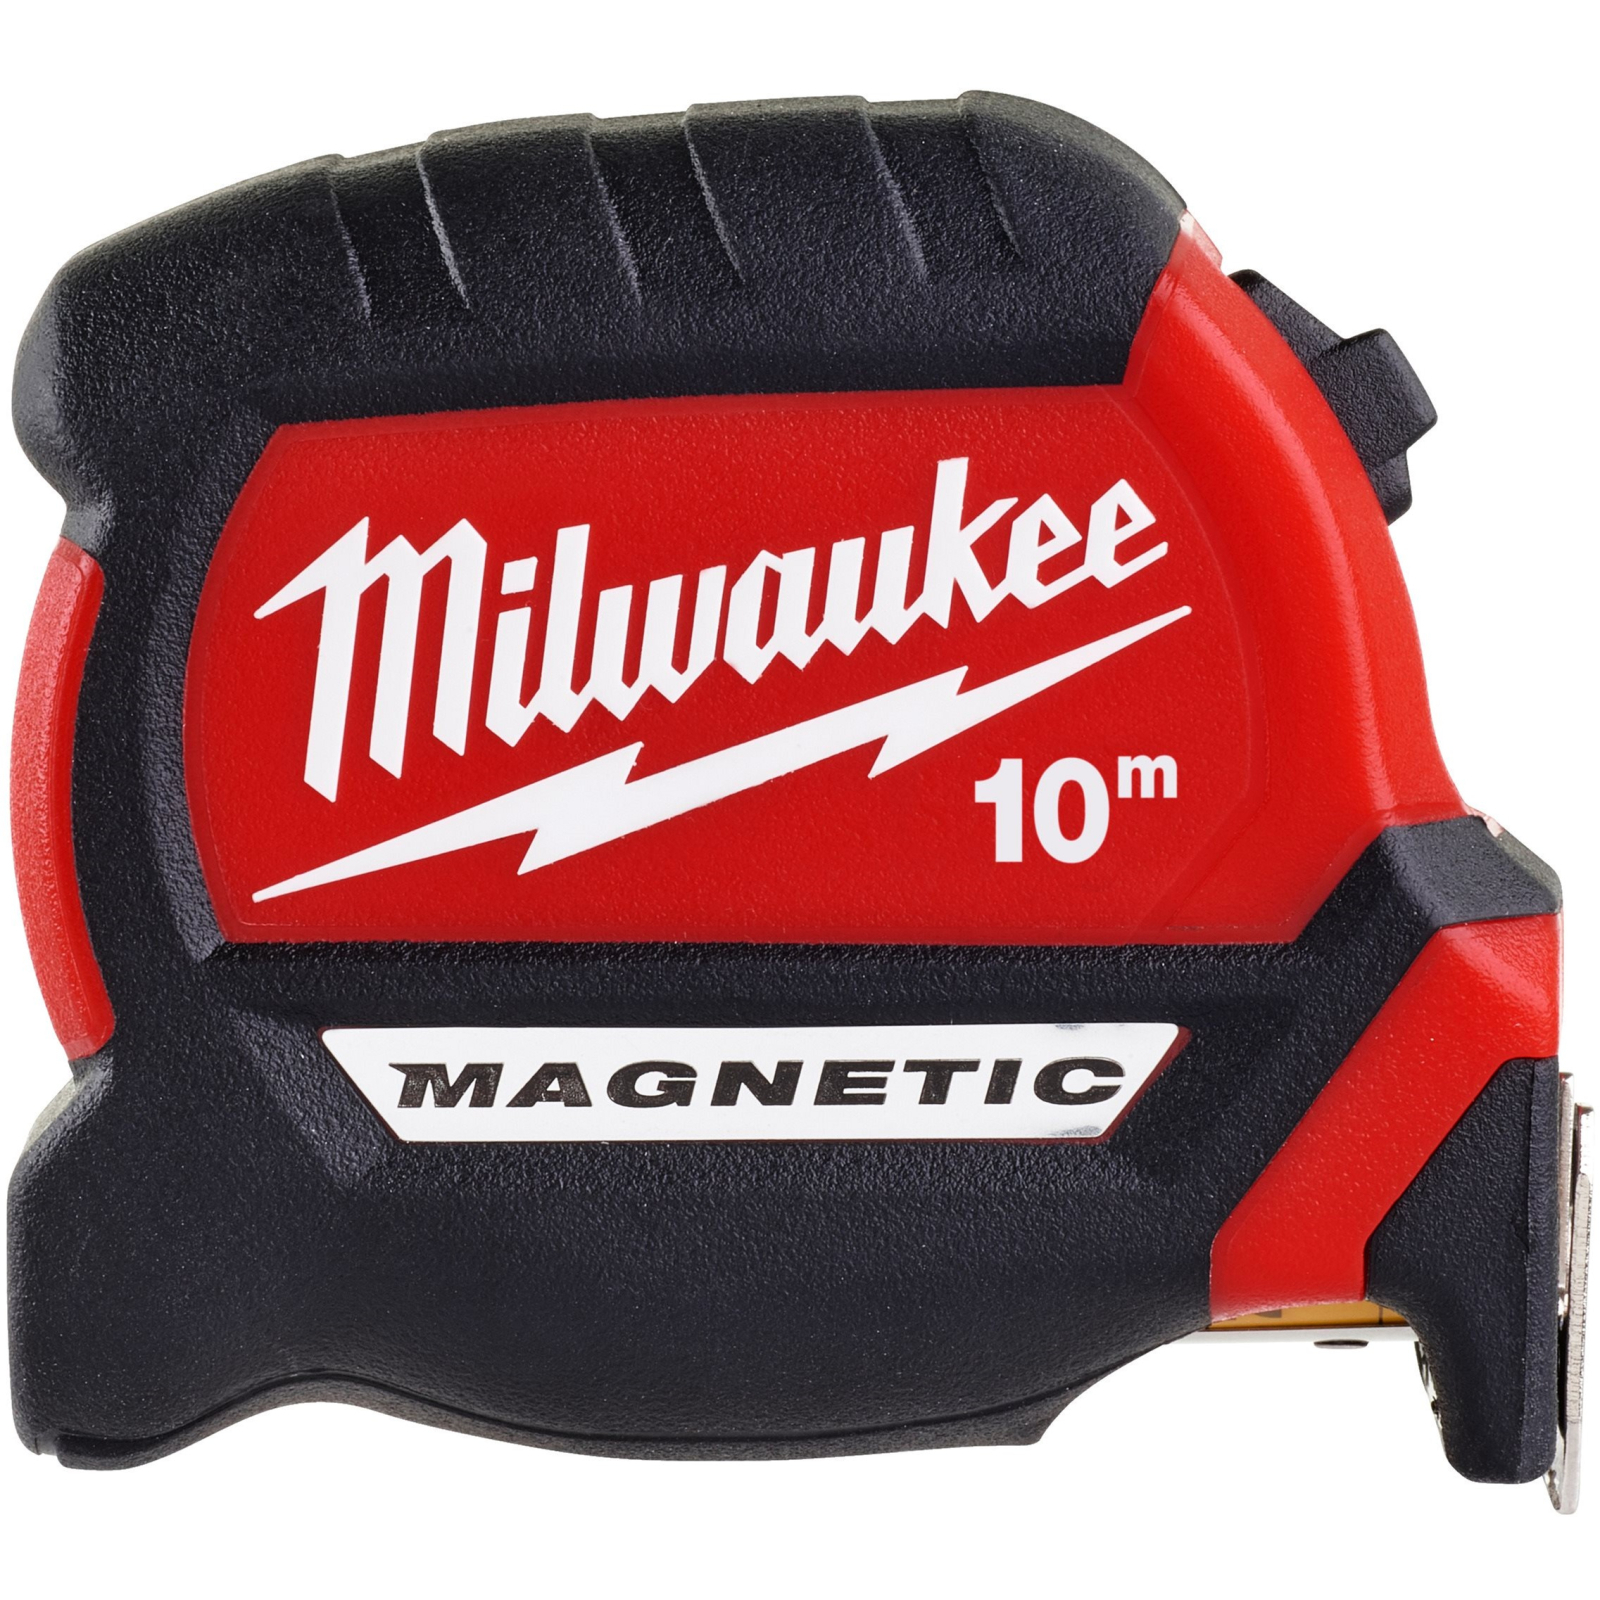 Рулетка Milwaukee магнітна PREMIUM, 8м, 27мм (4932464600)